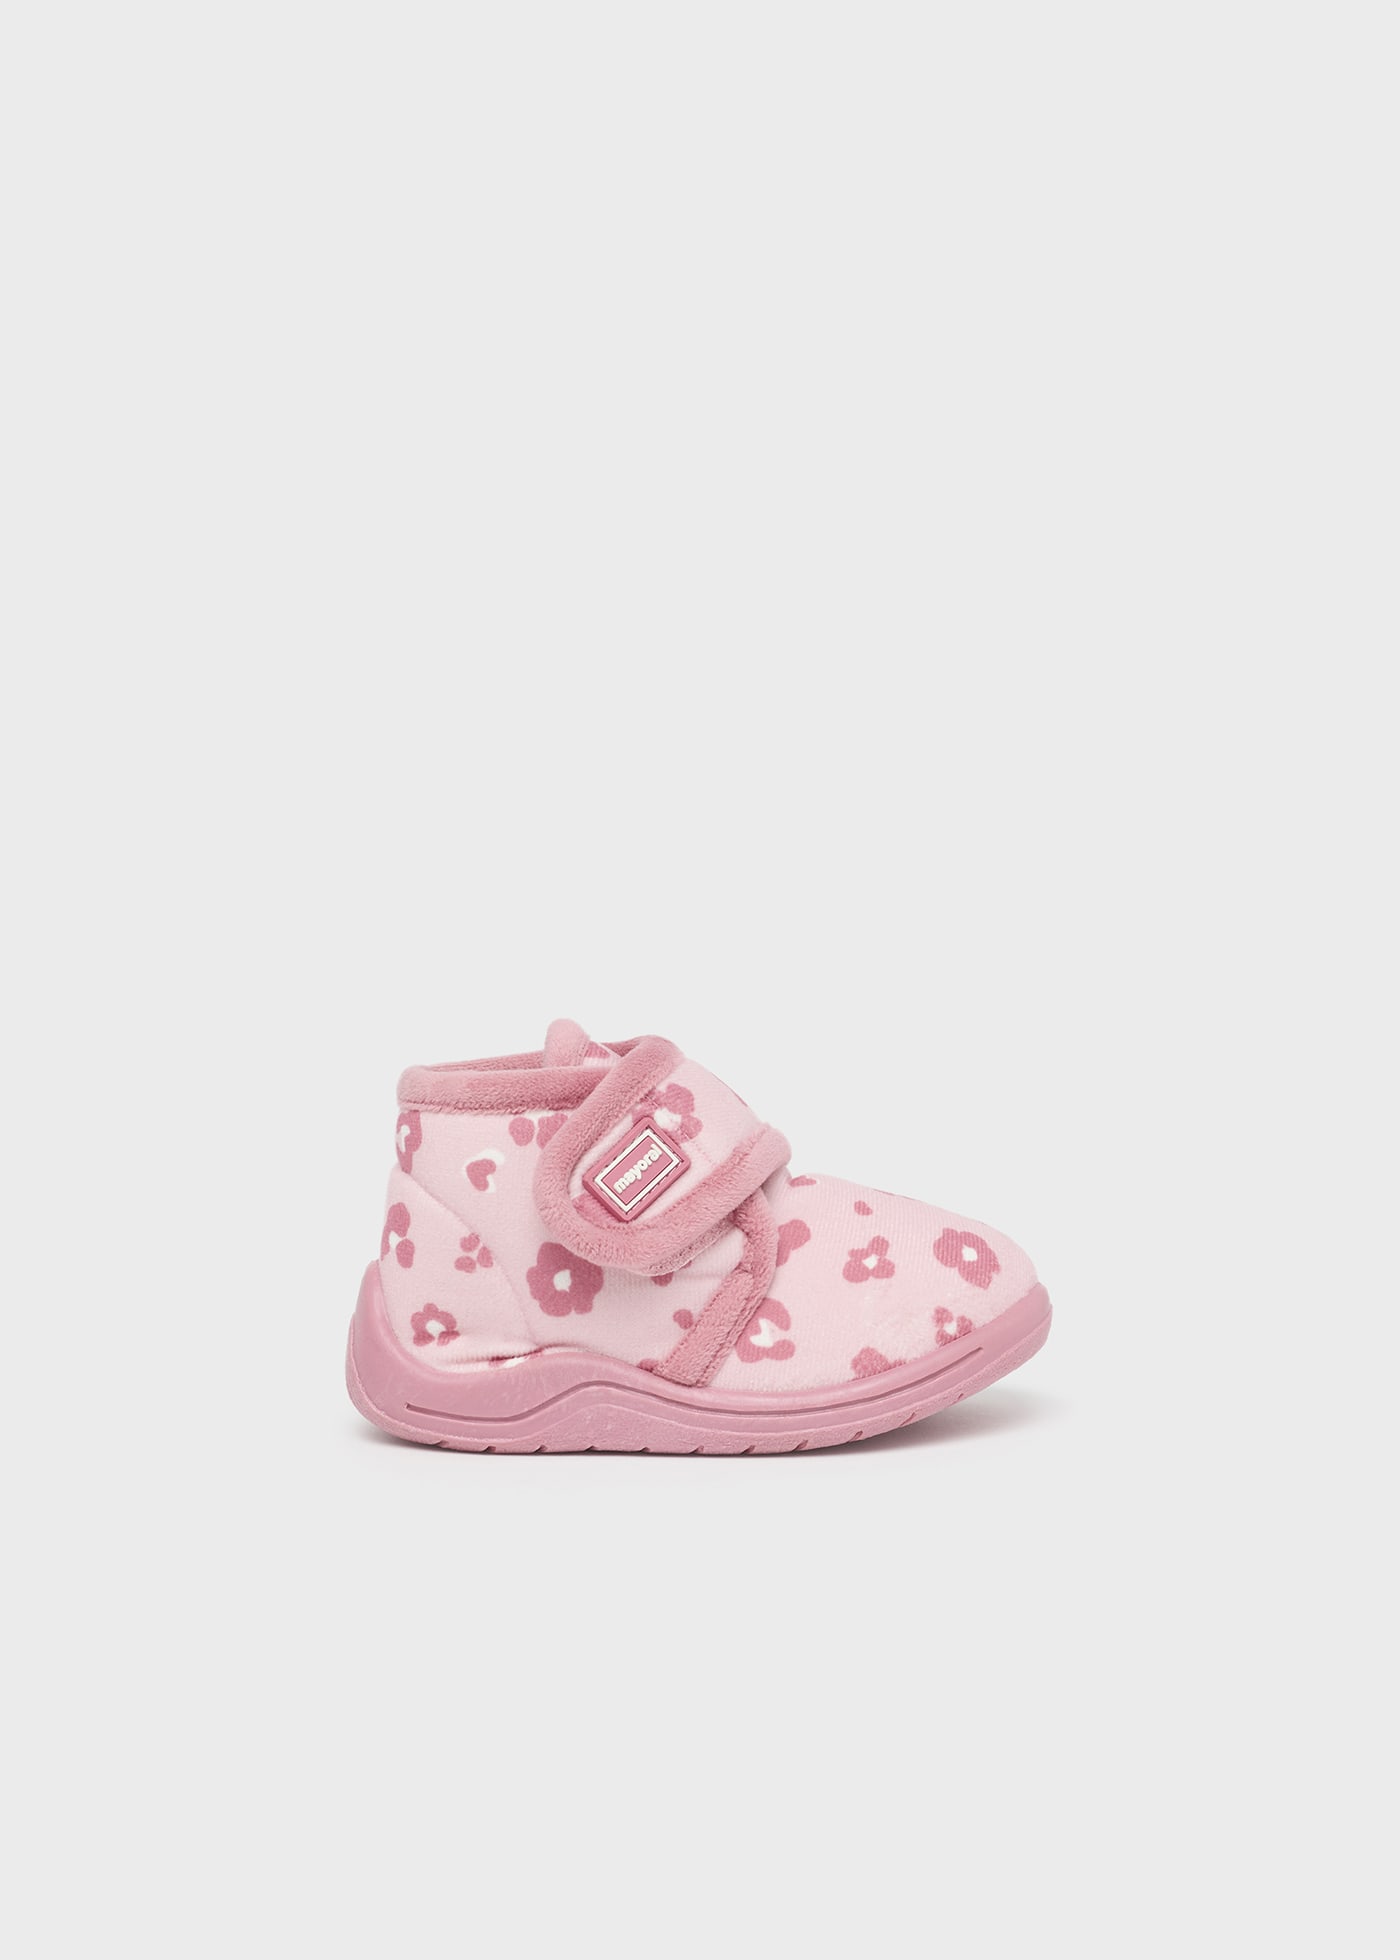 Pantofola stampata neonata